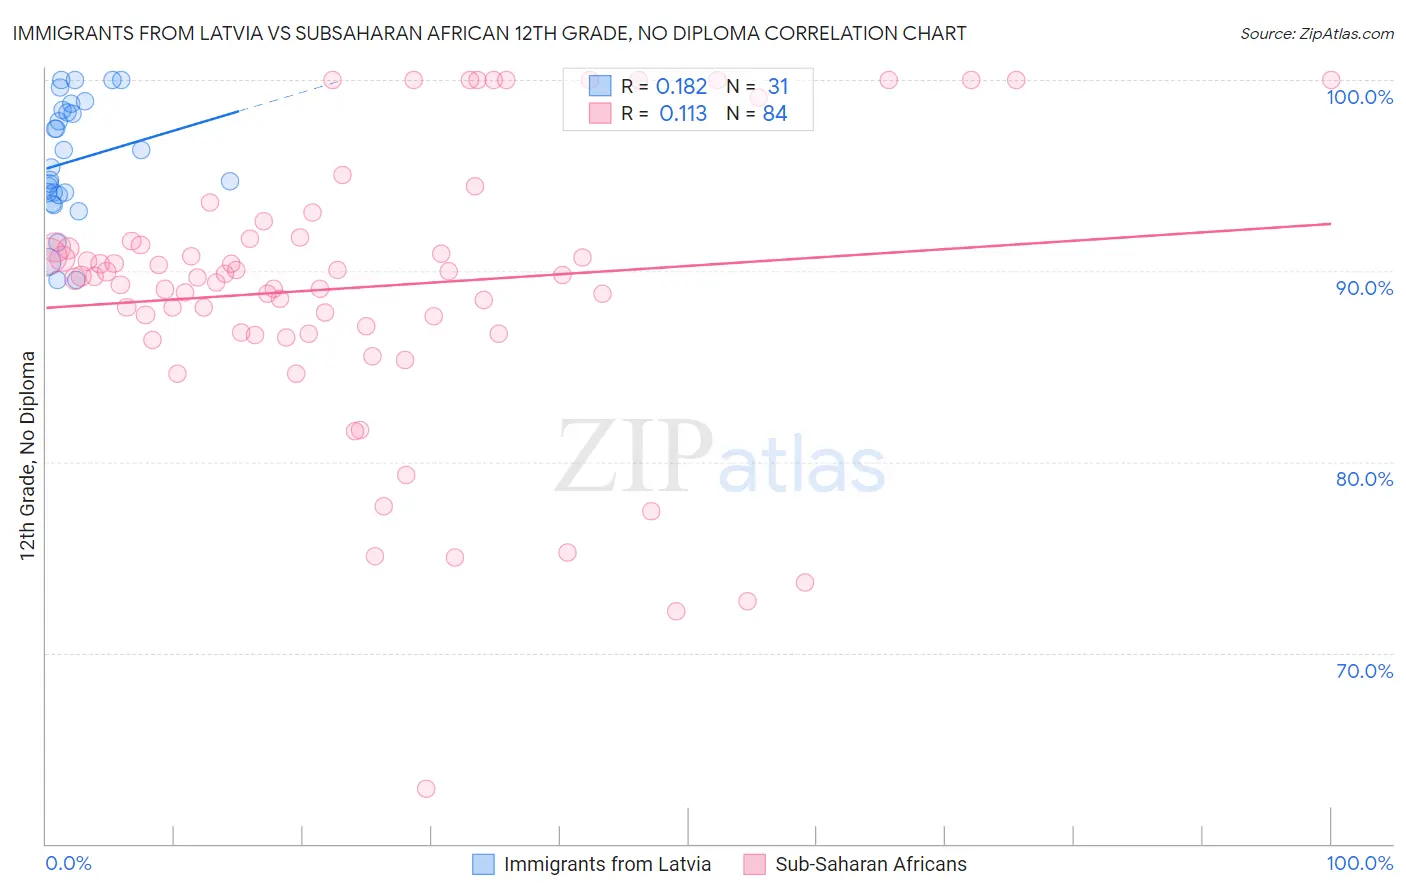 Immigrants from Latvia vs Subsaharan African 12th Grade, No Diploma